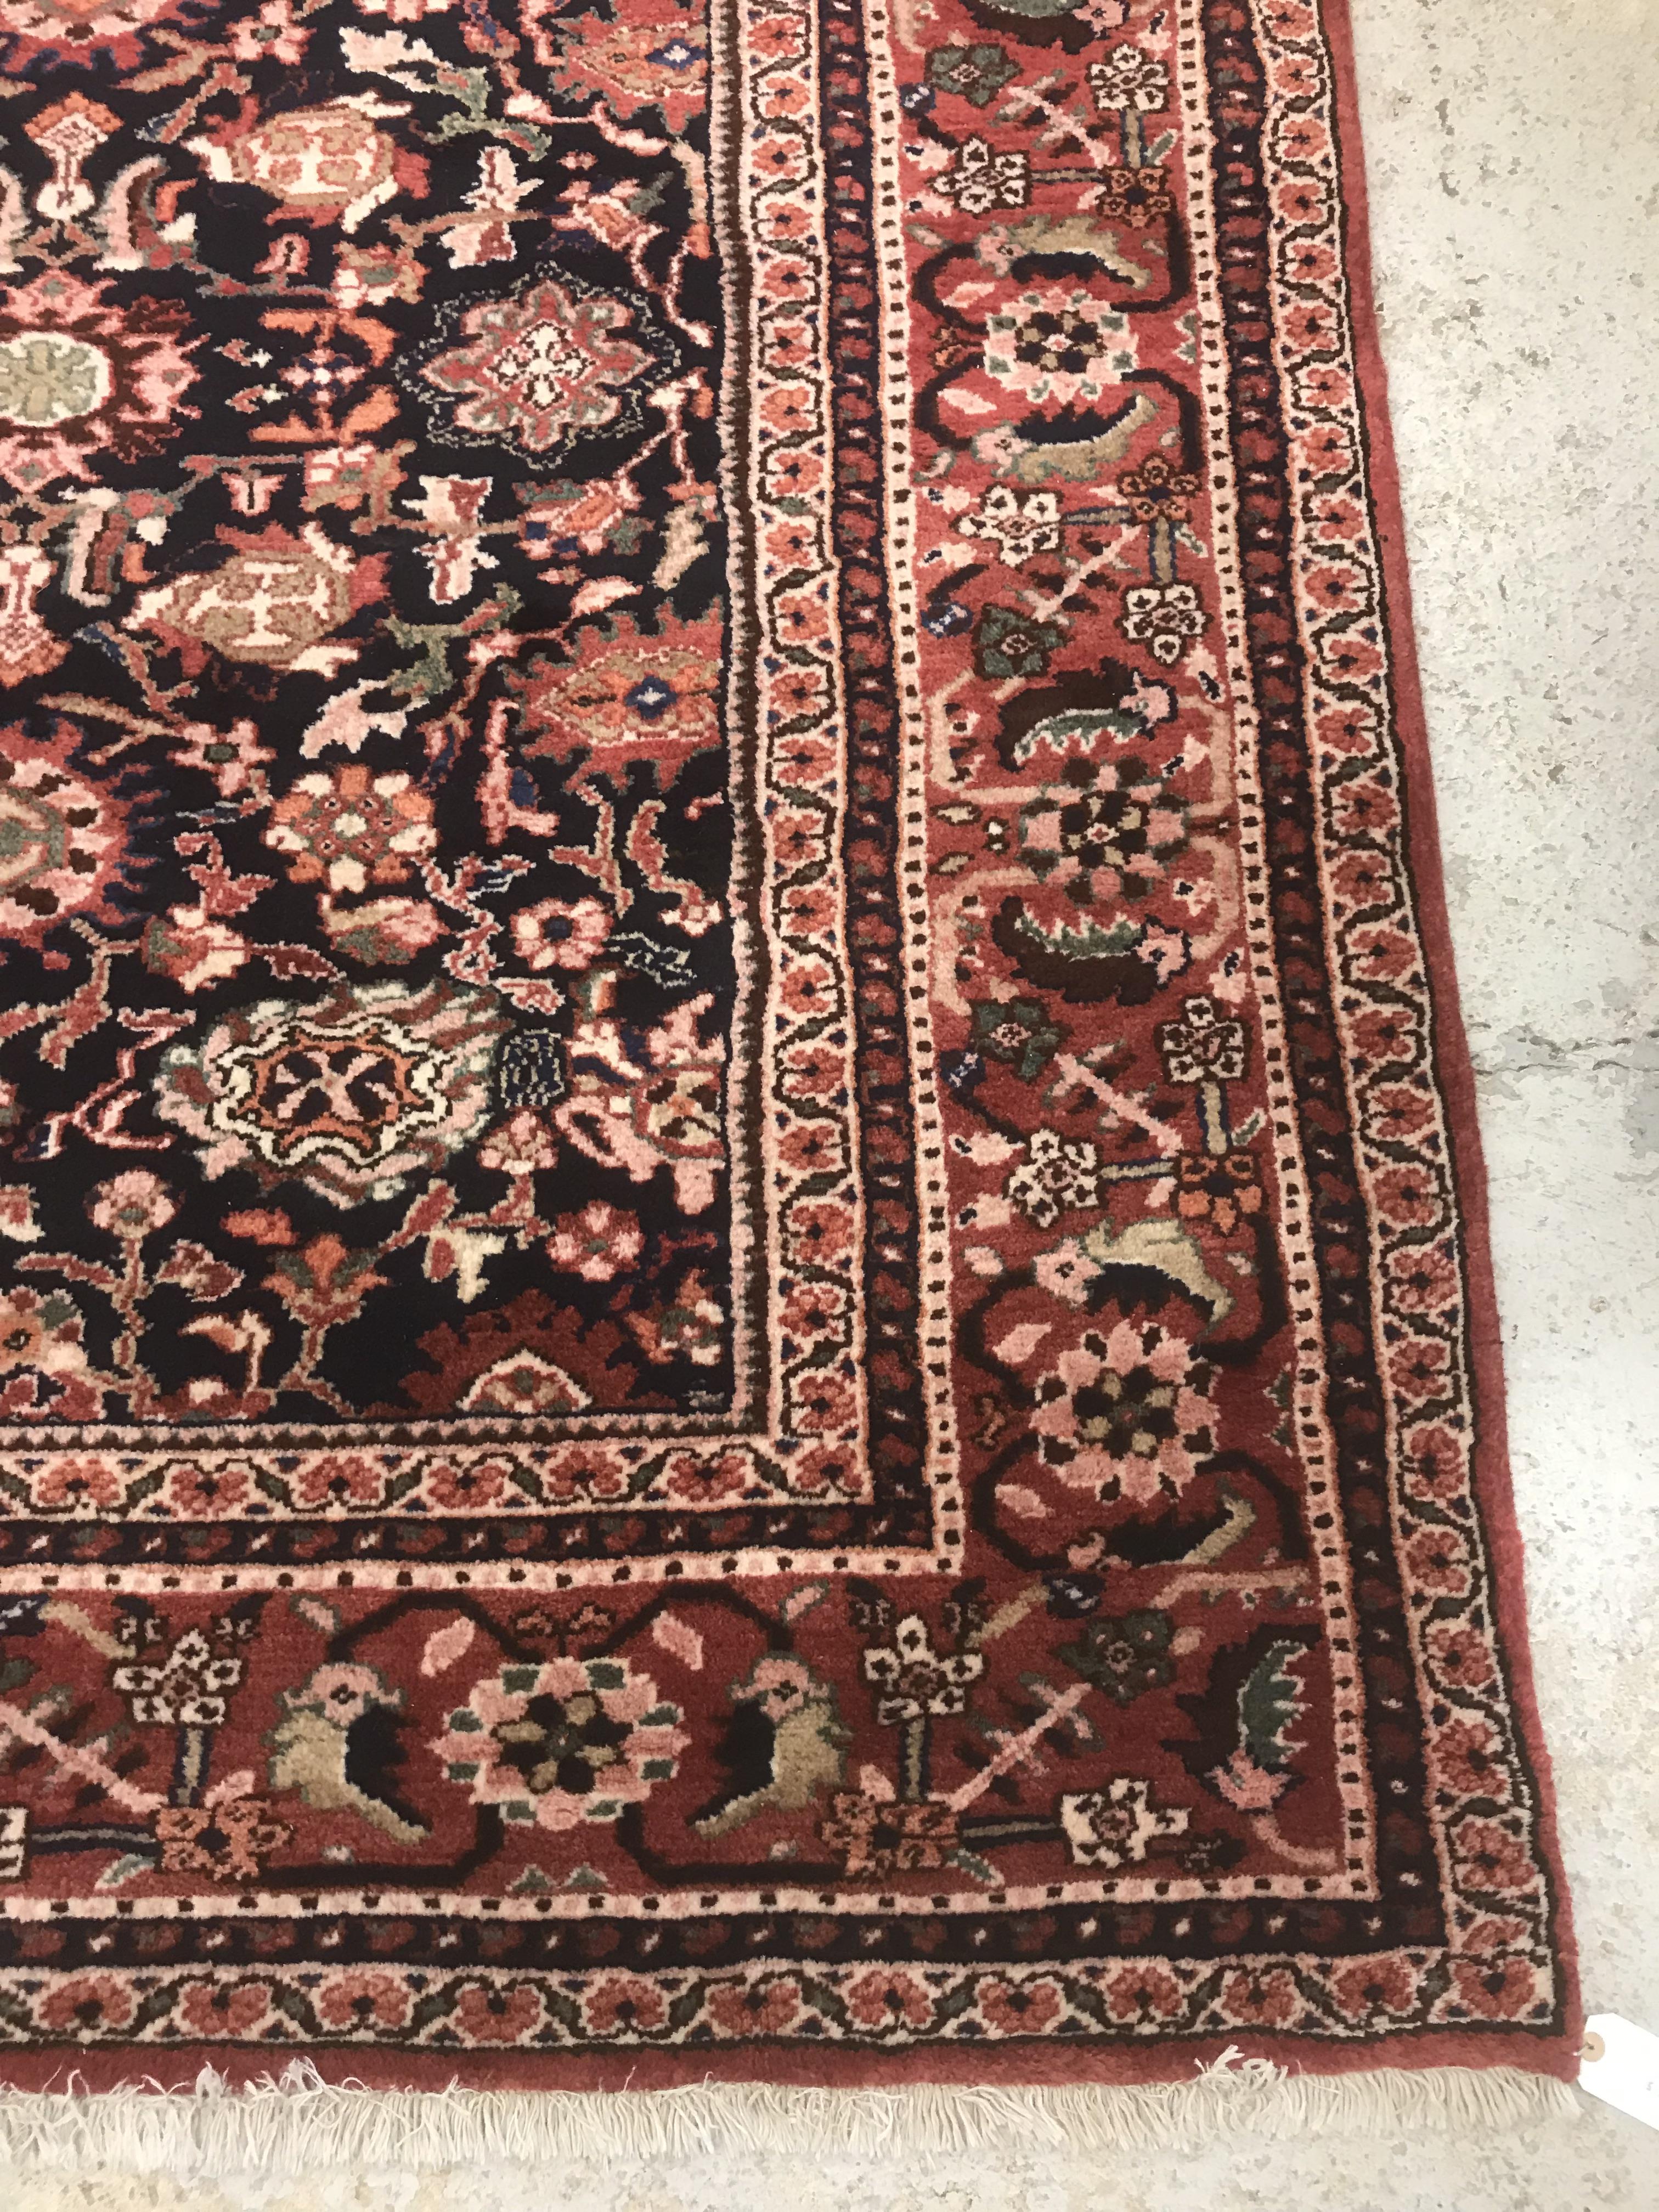 A 20th Century Afghan Kazak carpet, - Image 5 of 36